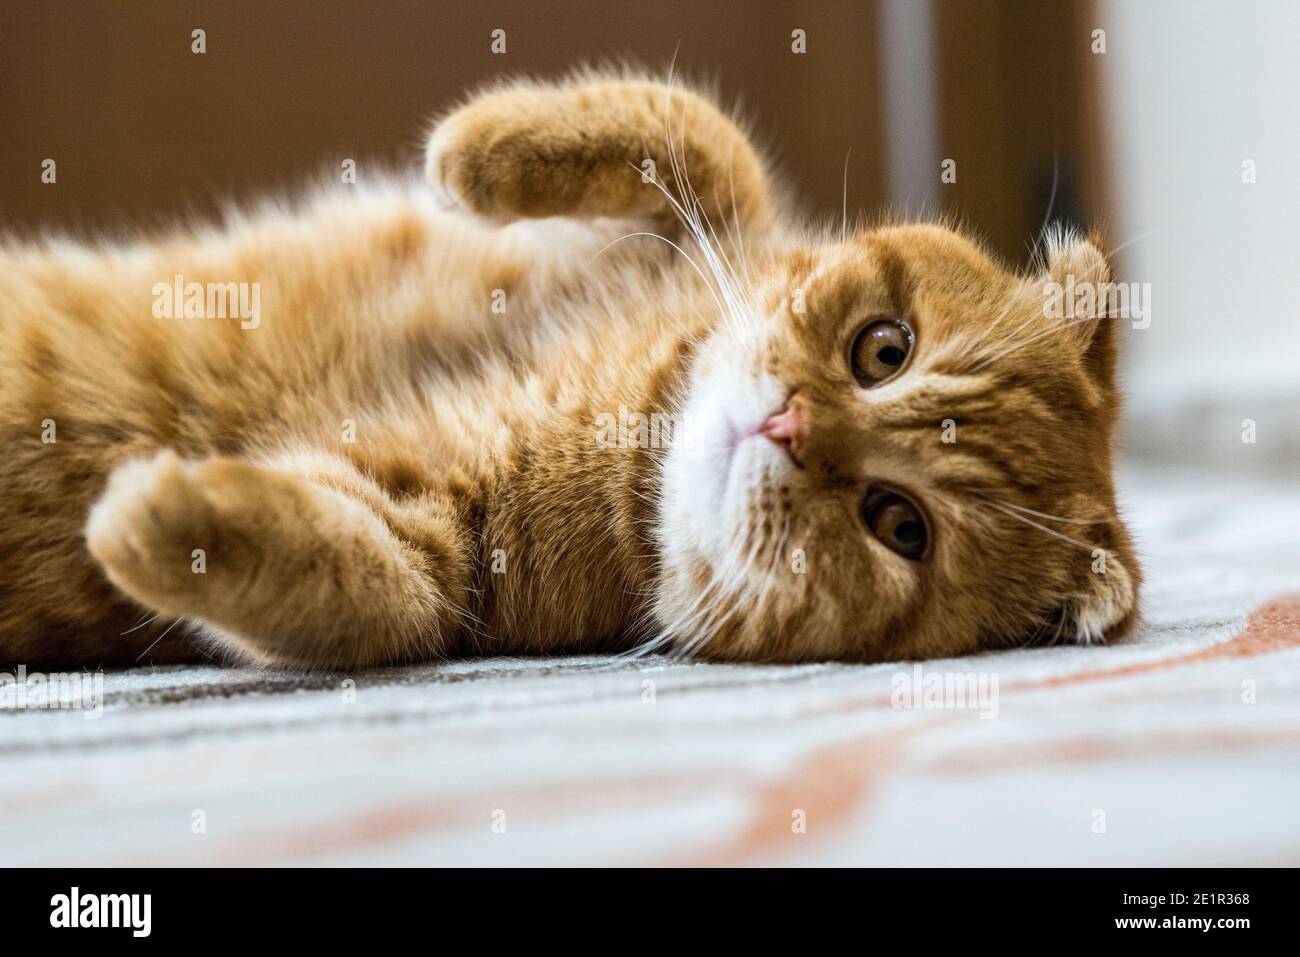 Domestic cat Scottish Fold Stock Photo